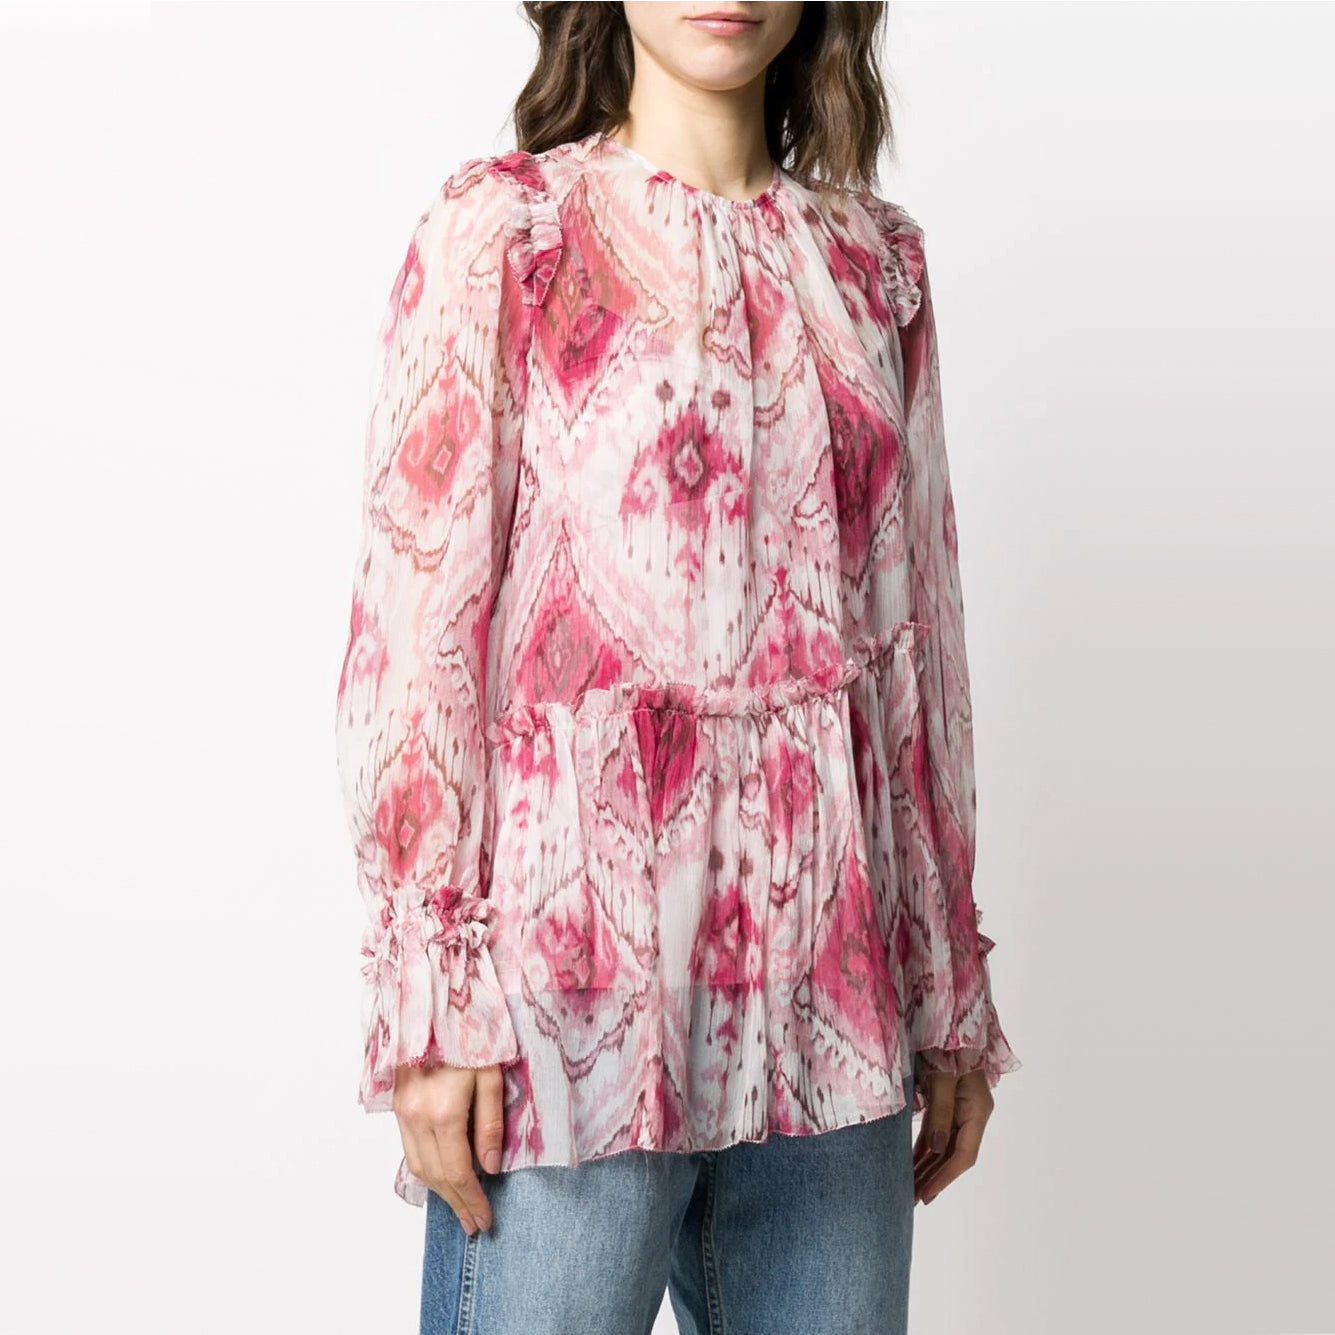 Zimmermann Asymetrical Printed Silk Blouse in Pink, size "2" (medium)